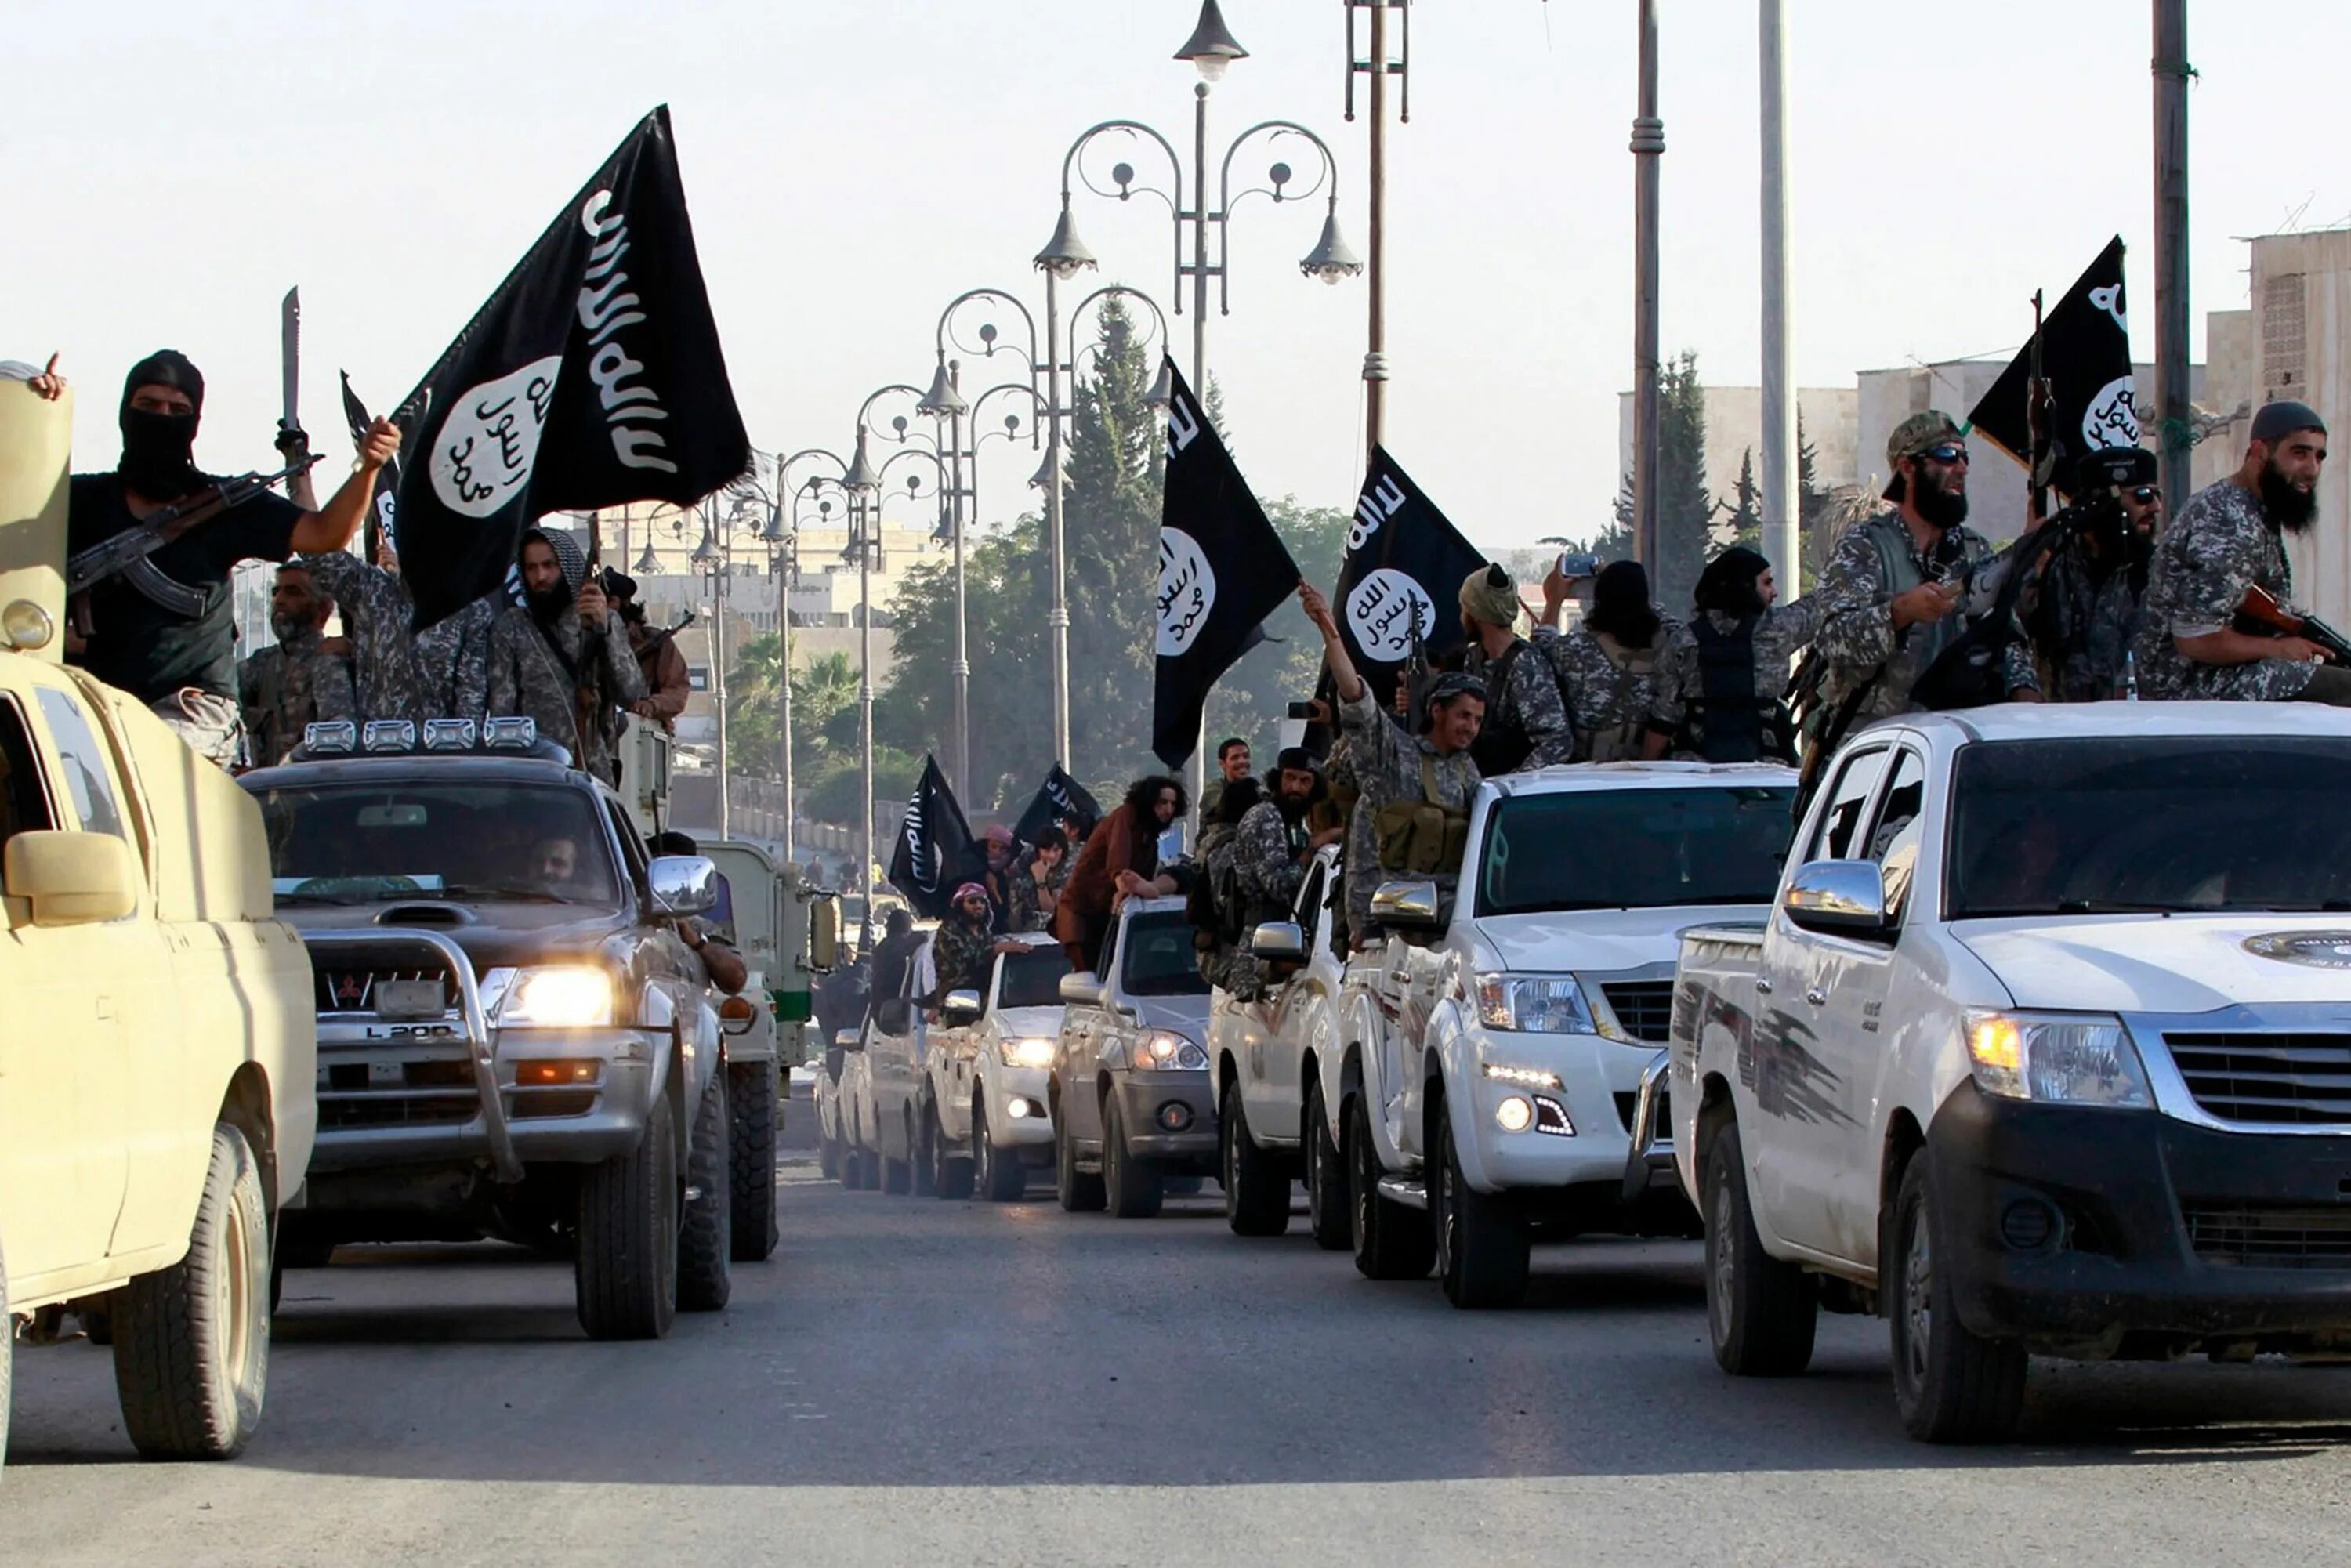 Toyota Hilux ИГИЛ. Исламское государство ИГИЛ. Джихад мобиль Тойота. Исламское государство Ирака и Леванта ИГИЛ. Как переводится игил